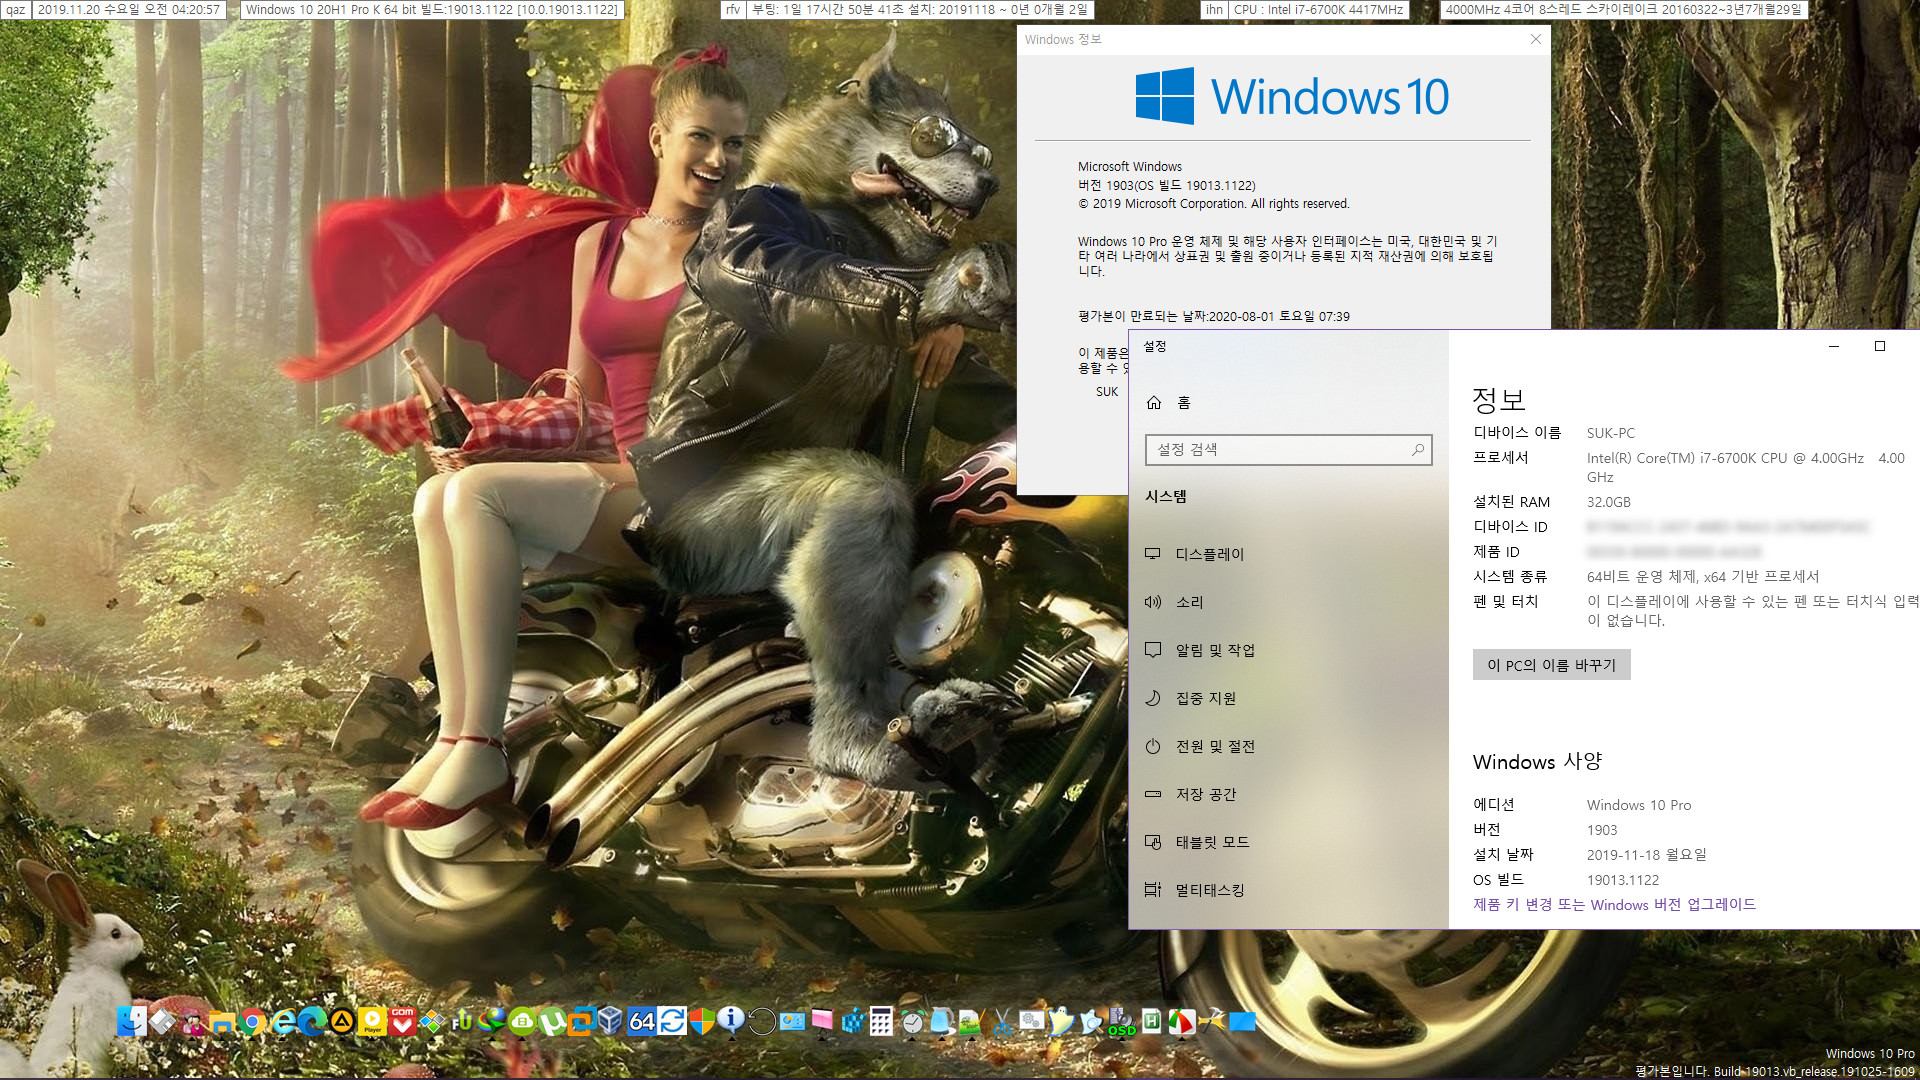 Windows 10 20H1 슬로우 링으로 나온 19013.1 빌드 - ms표 iso 파일 - Windows10_InsiderPreview_Client_x64_ko-kr_19013.iso 로 업그레이드 설치 완료 - 19013.1122 빌드 누적 업데이트 설치 완료 - 2일간 잘 사용중입니다 2019-11-20_042057.jpg